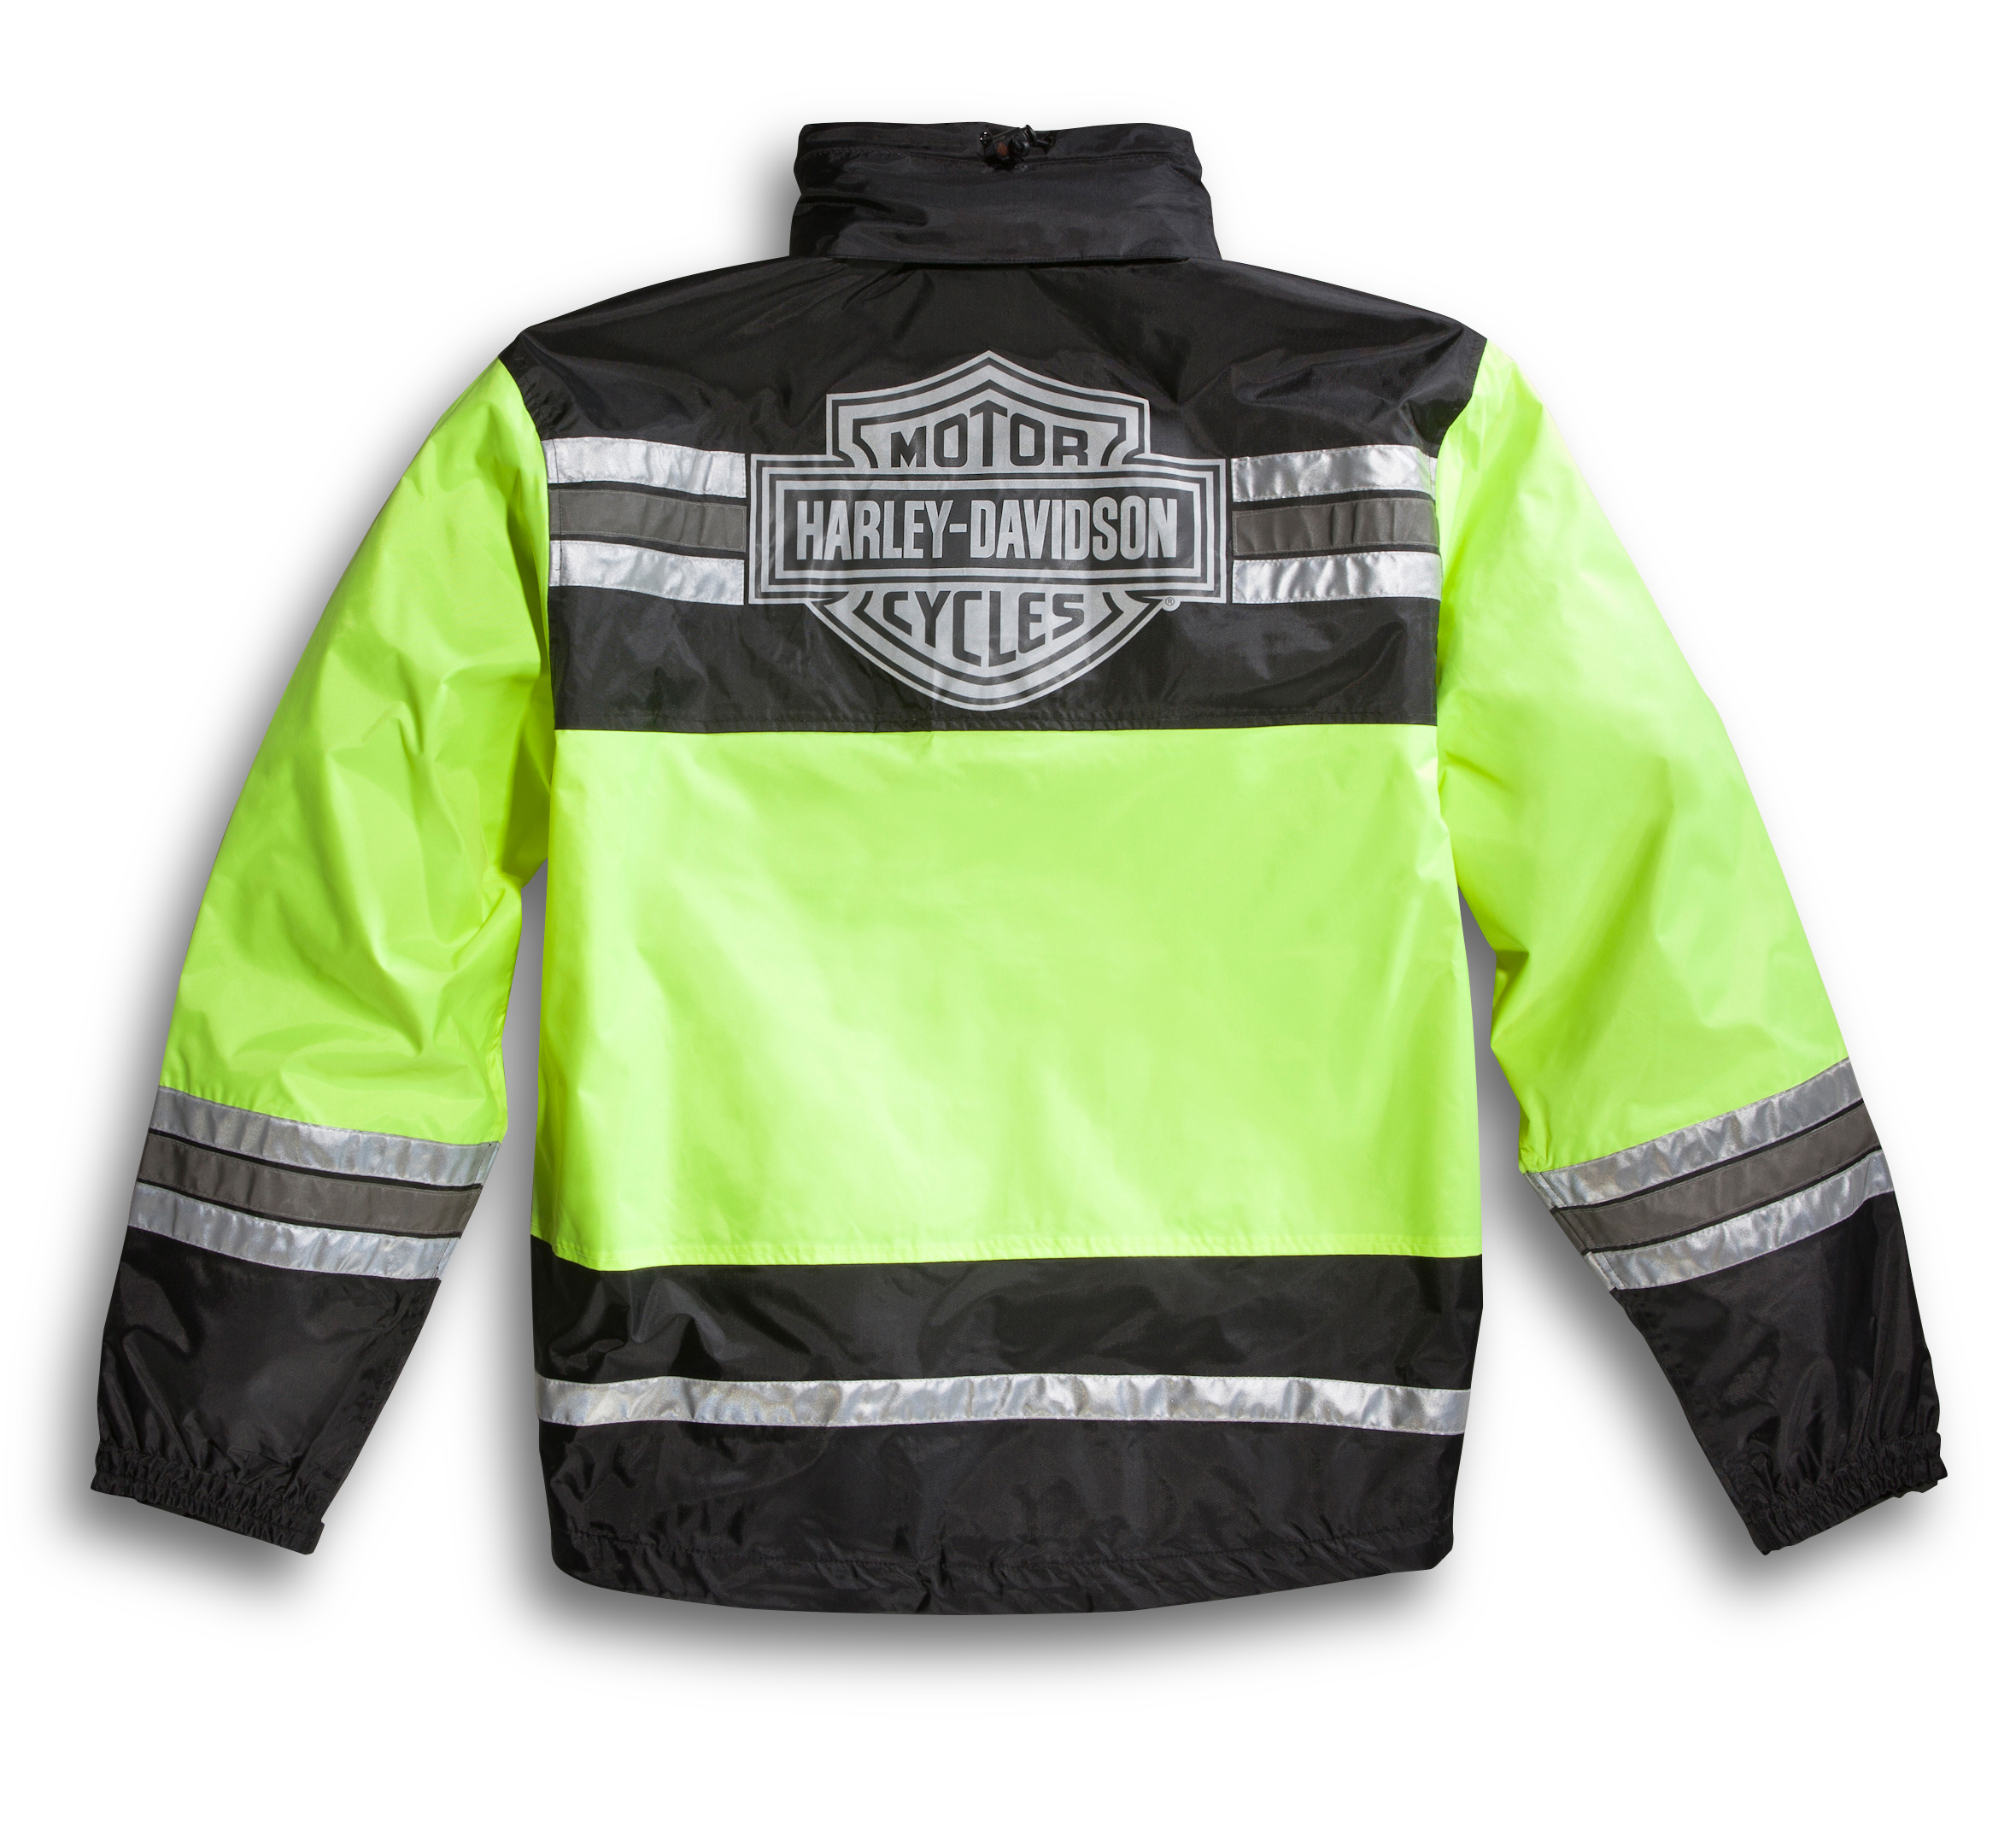 Harley-Davidson Women's Hi-Visibility Reflective Rain Jacket 98163-18ew